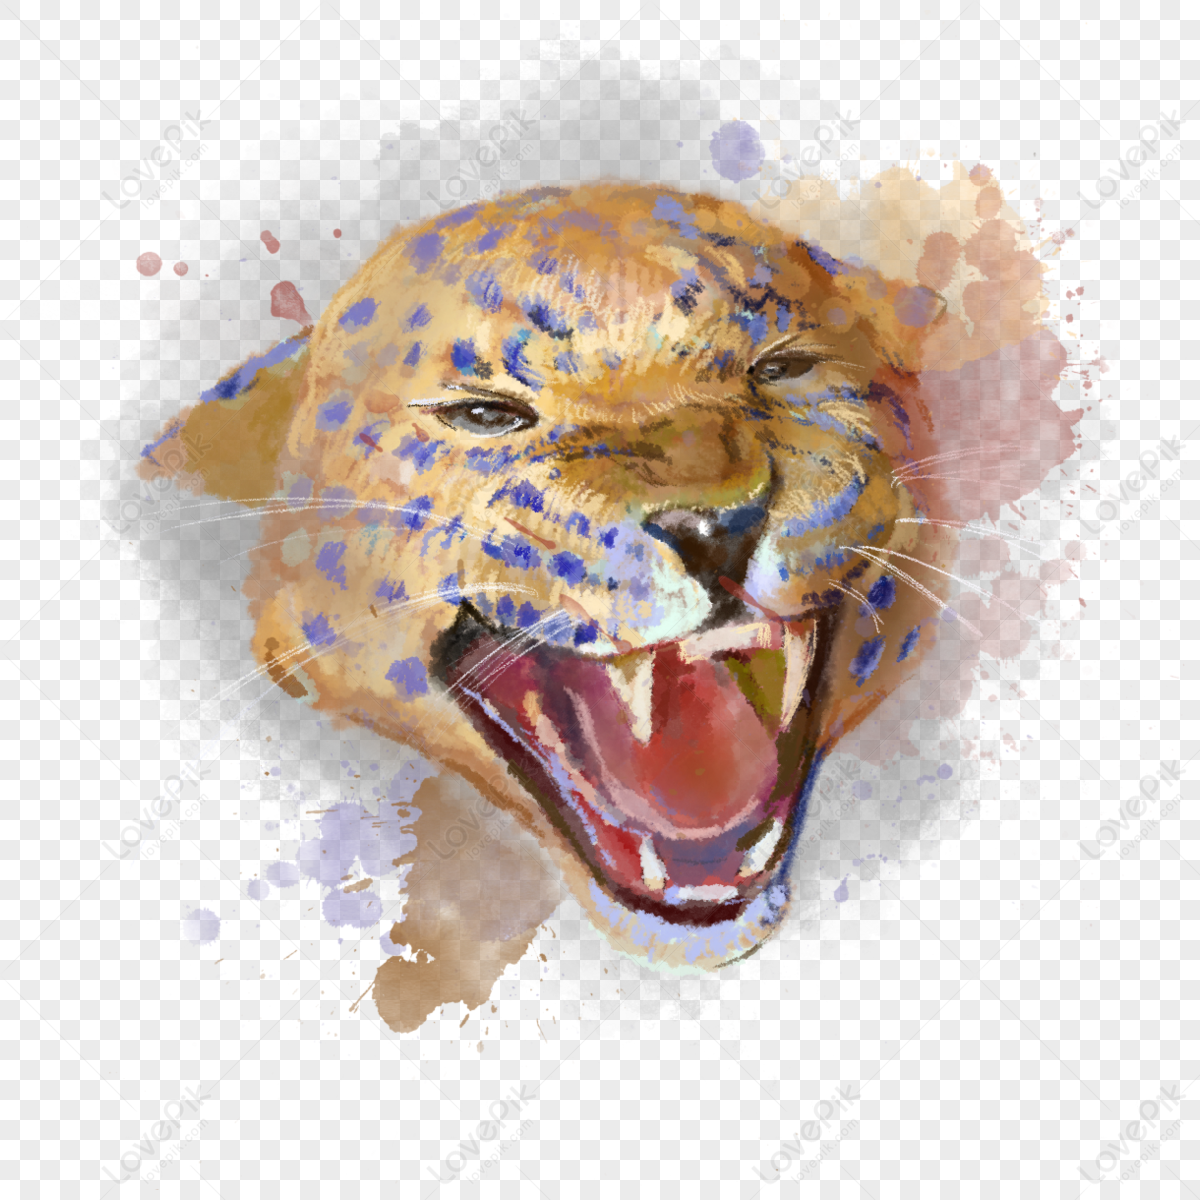 Watercolor halo fat animal leopard avatar,splash,anime png image